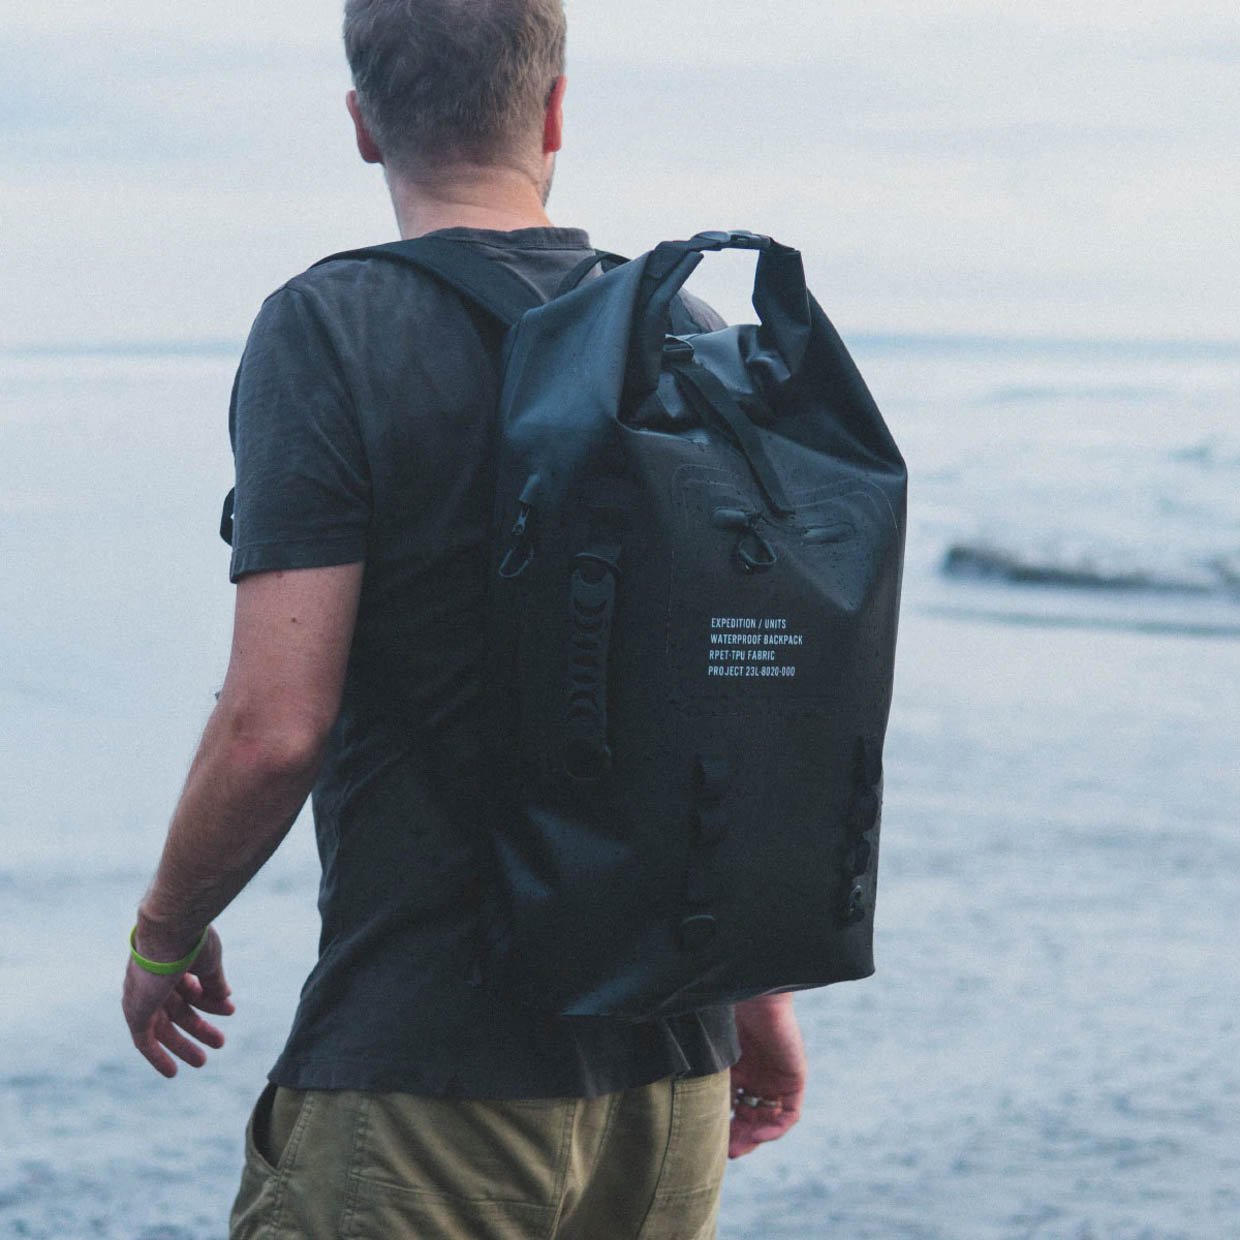 Project 8020 Waterproof Backpack